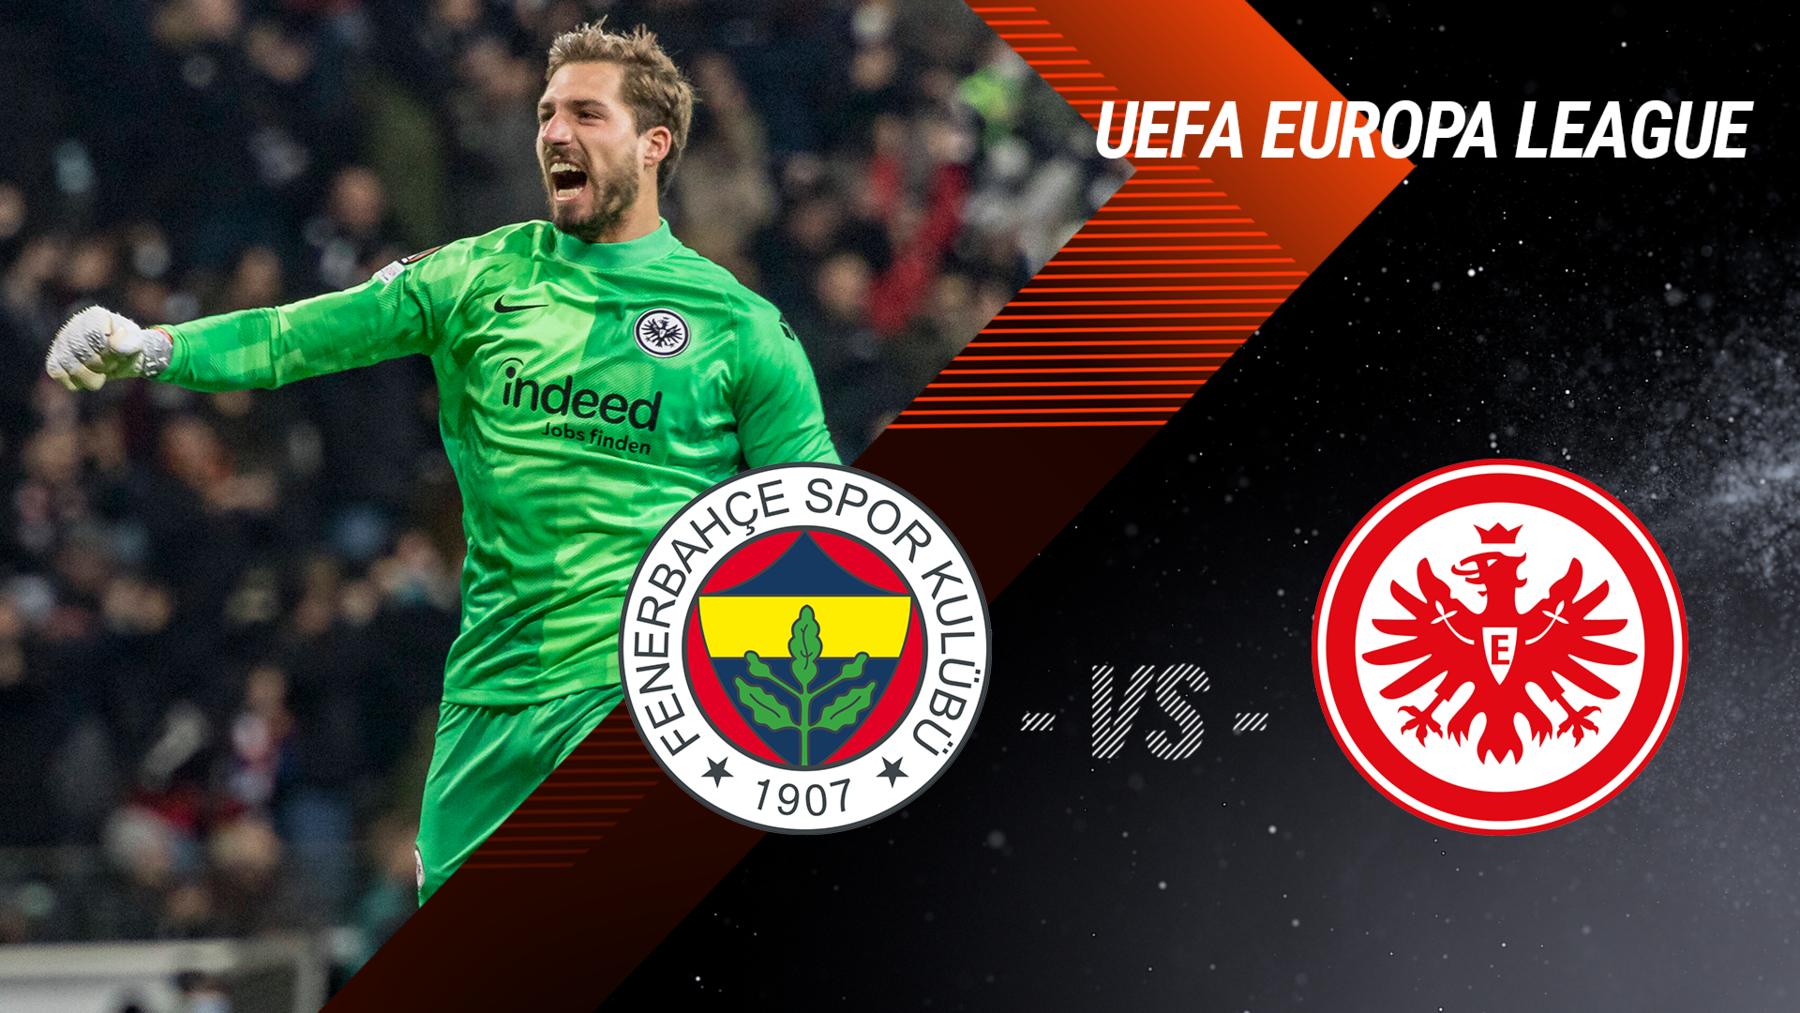 Matchday 6: Fenerbahce Istanbul vs. Eintracht Frankfurt